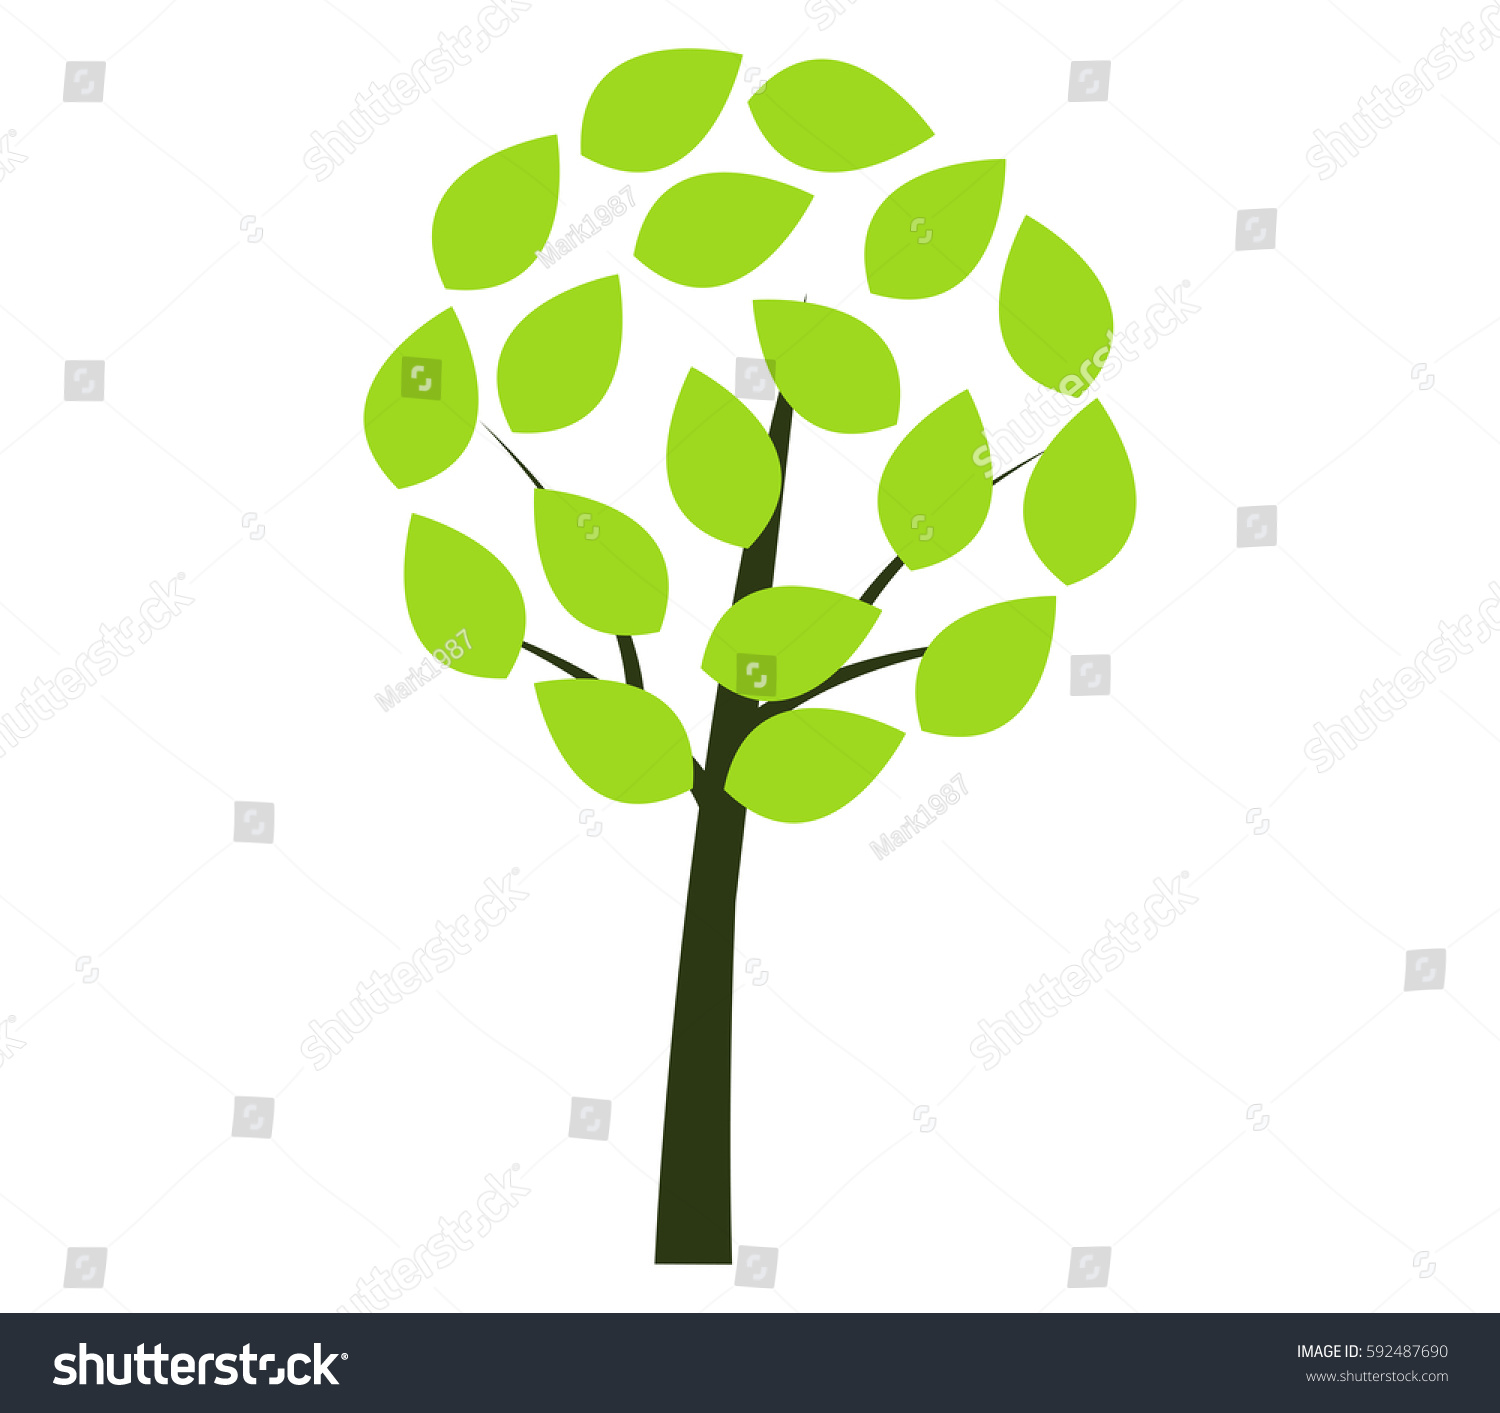 Edit Vectors Free Online - tree icon | Shutterstock Editor